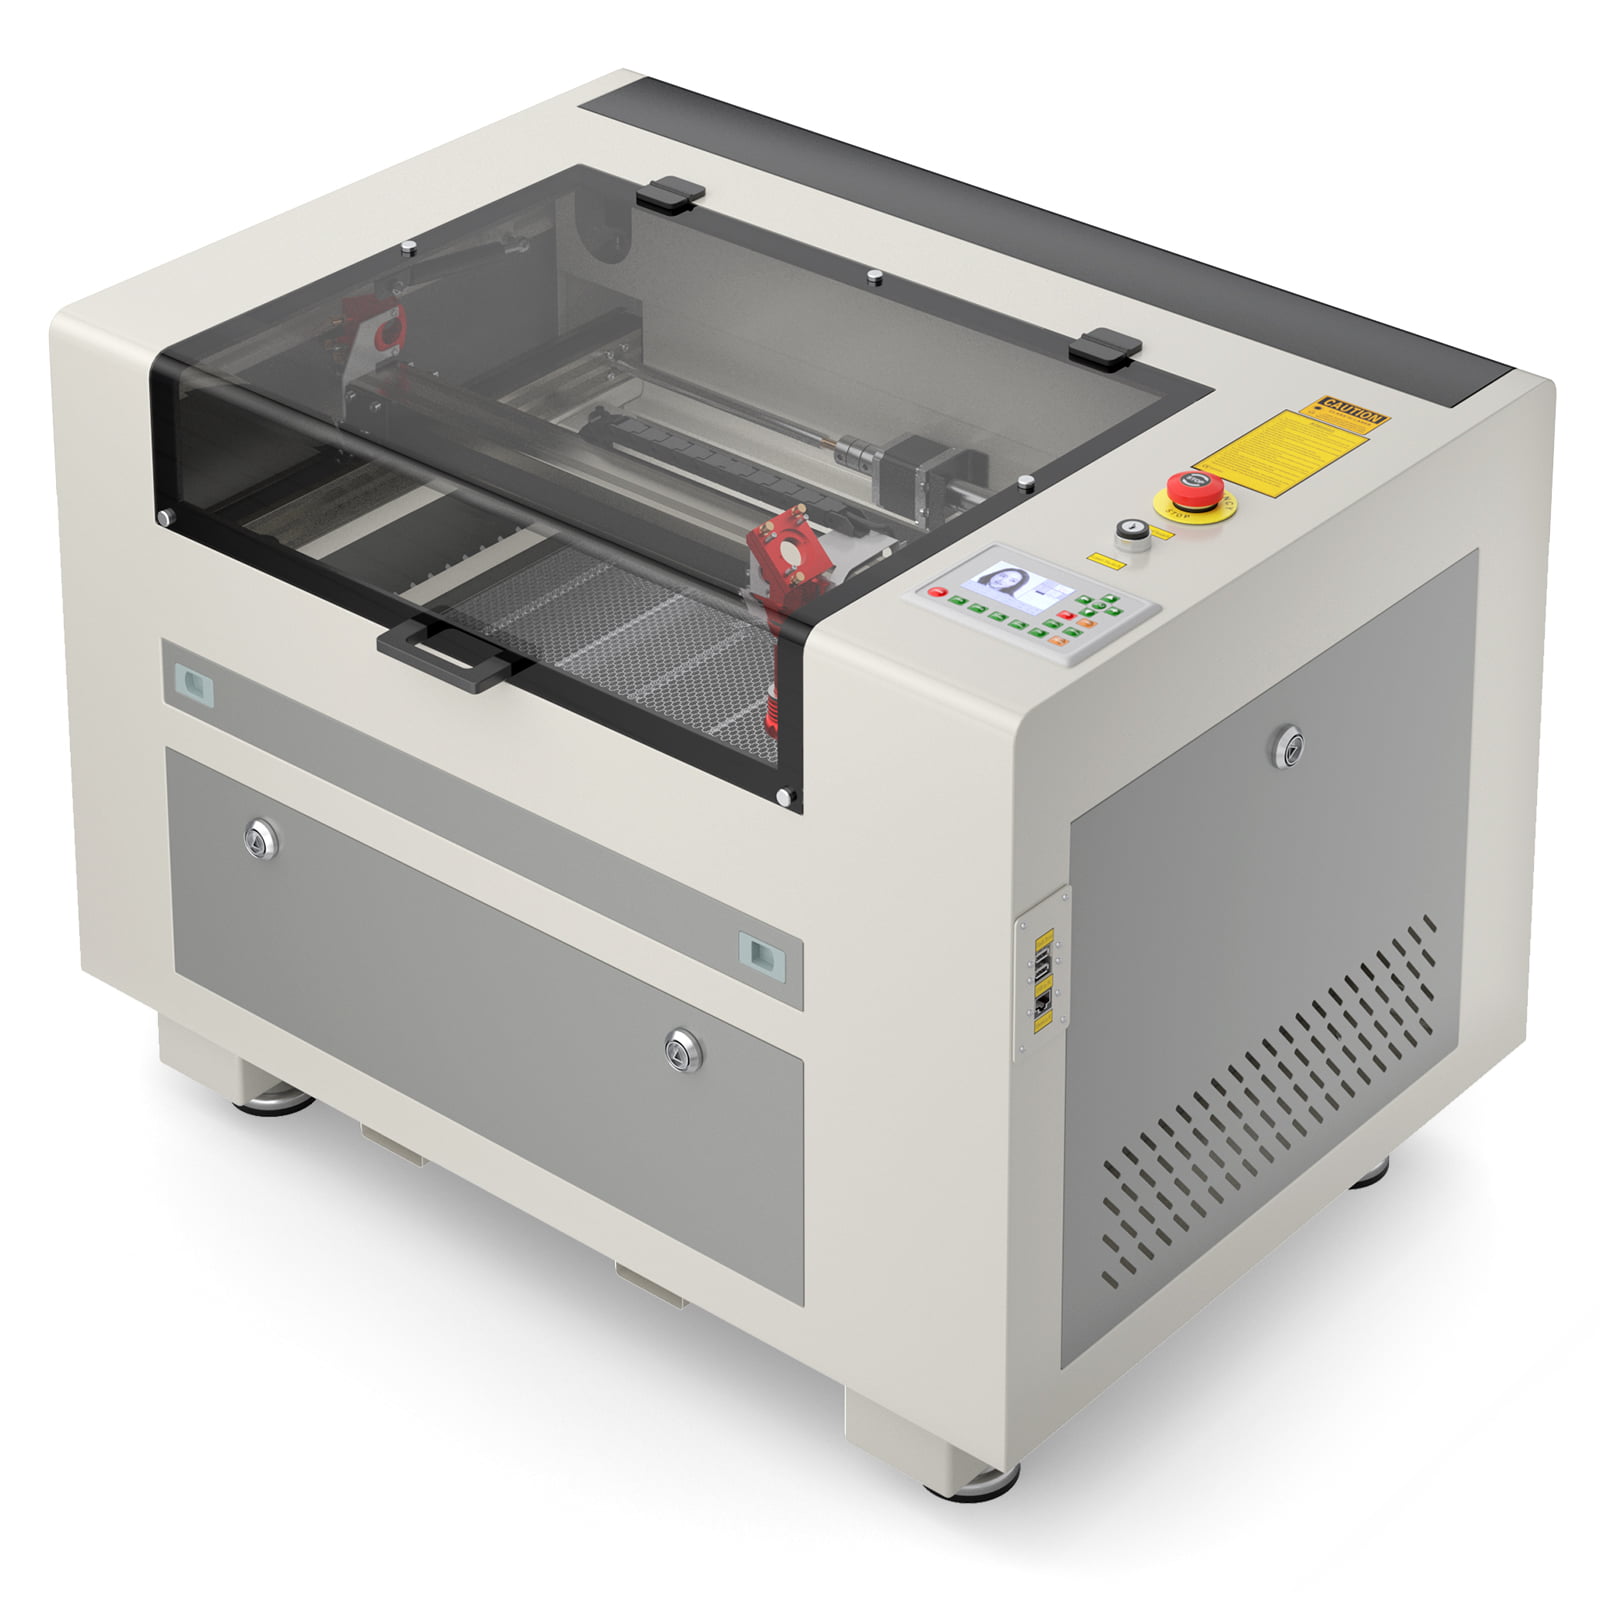 50W Laser Engraving Machine Air Assist Wood Printer Laser Engraver Mac –  The Engrave Company